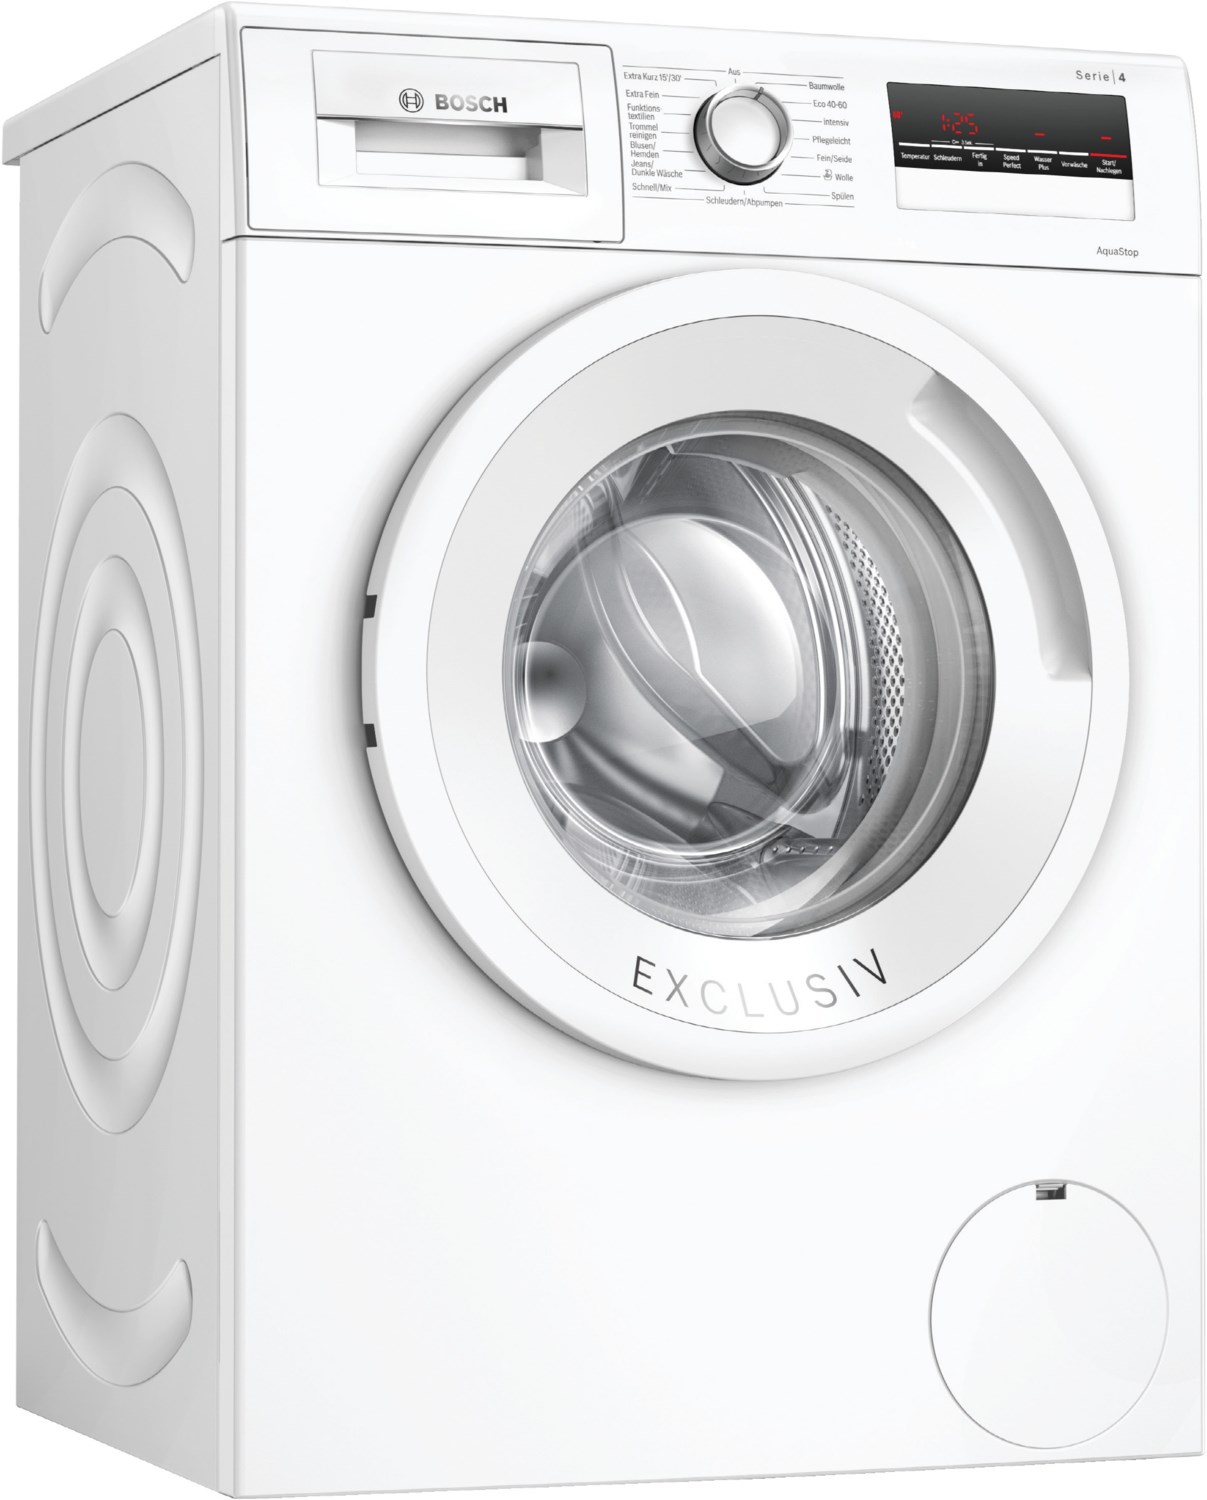 Bosch Serie 4 Waschmaschine 8 kg 1400 U/min.